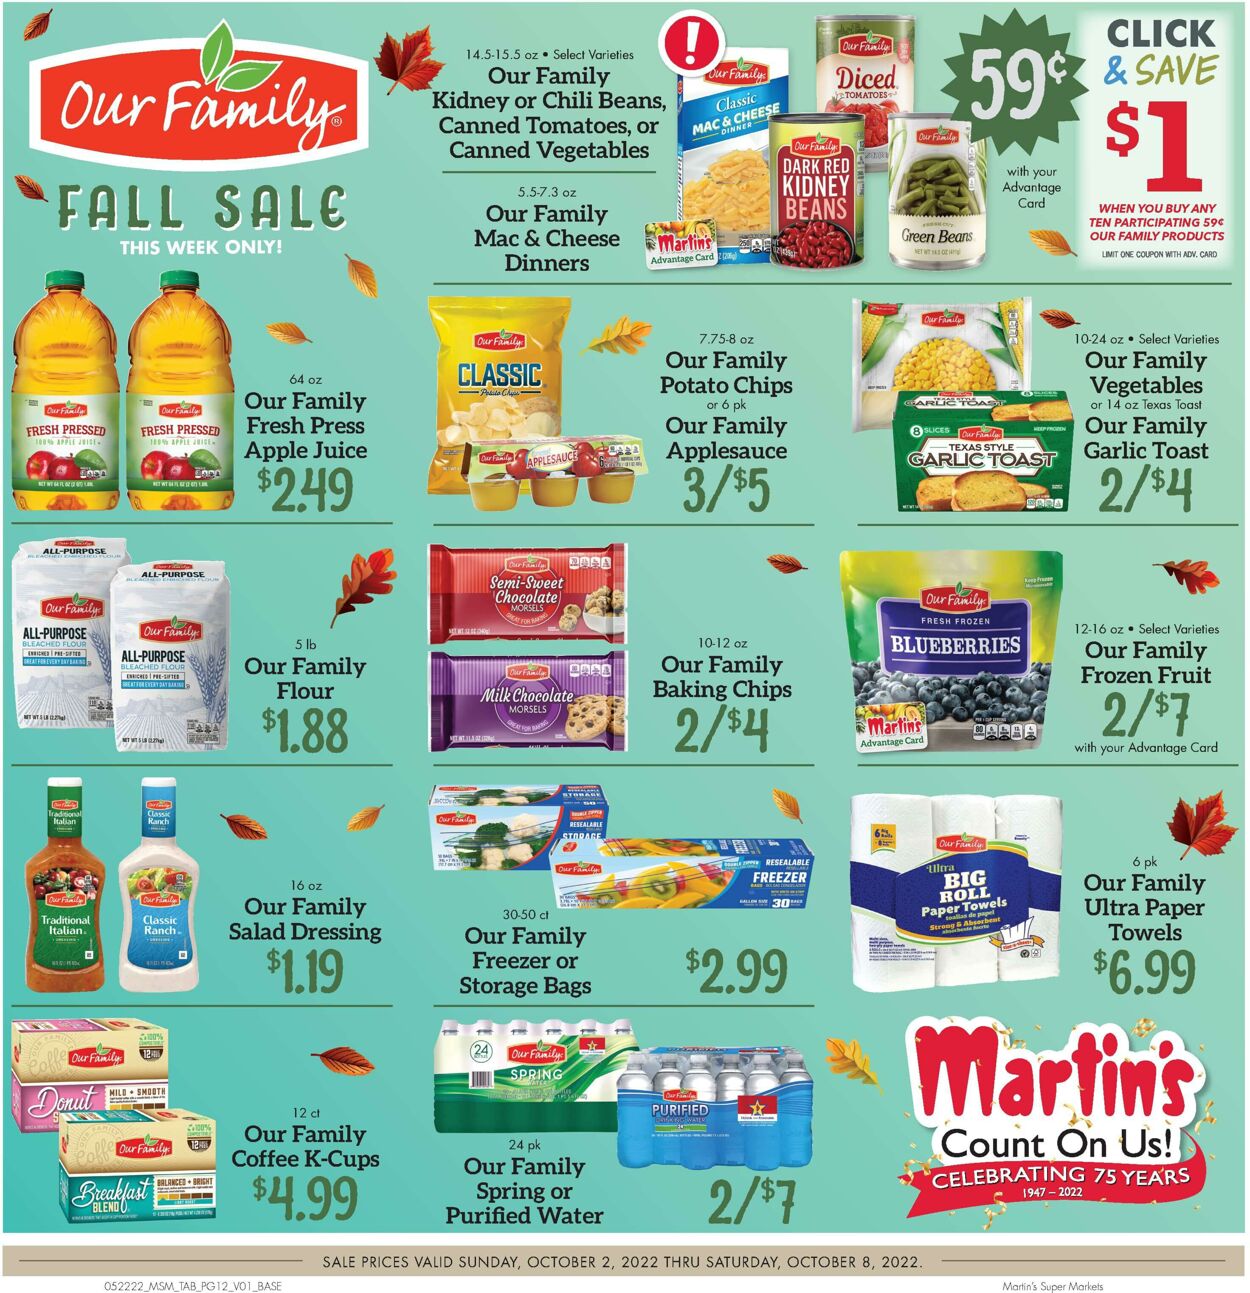 Weekly ad Martin's Supermarkets 10/02/2022 - 10/08/2022